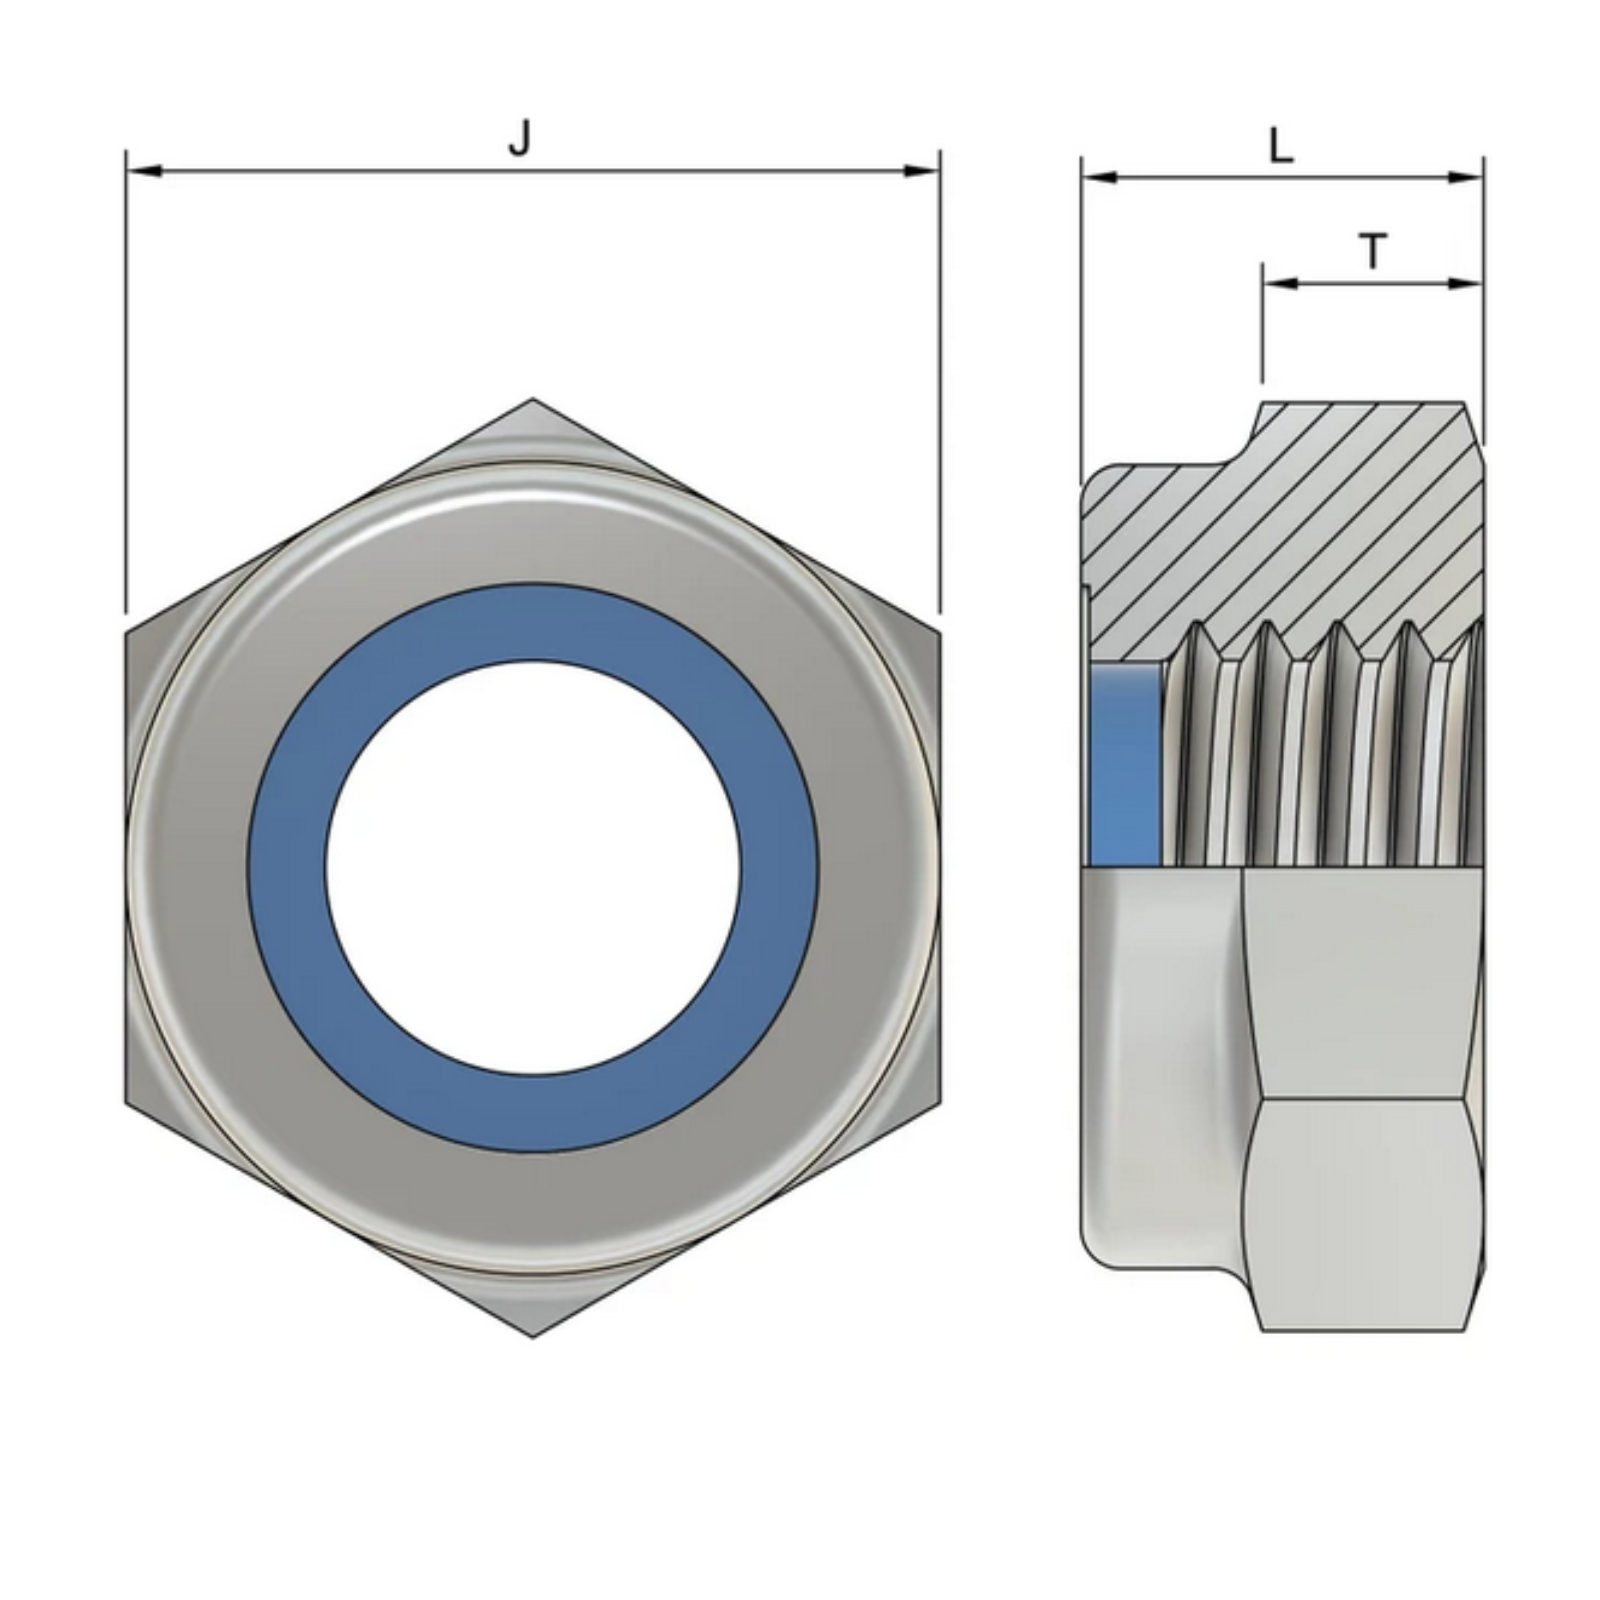 M5 Hexagon Nylon Locking Nuts (DIN 985) - Zinc Plated Steel